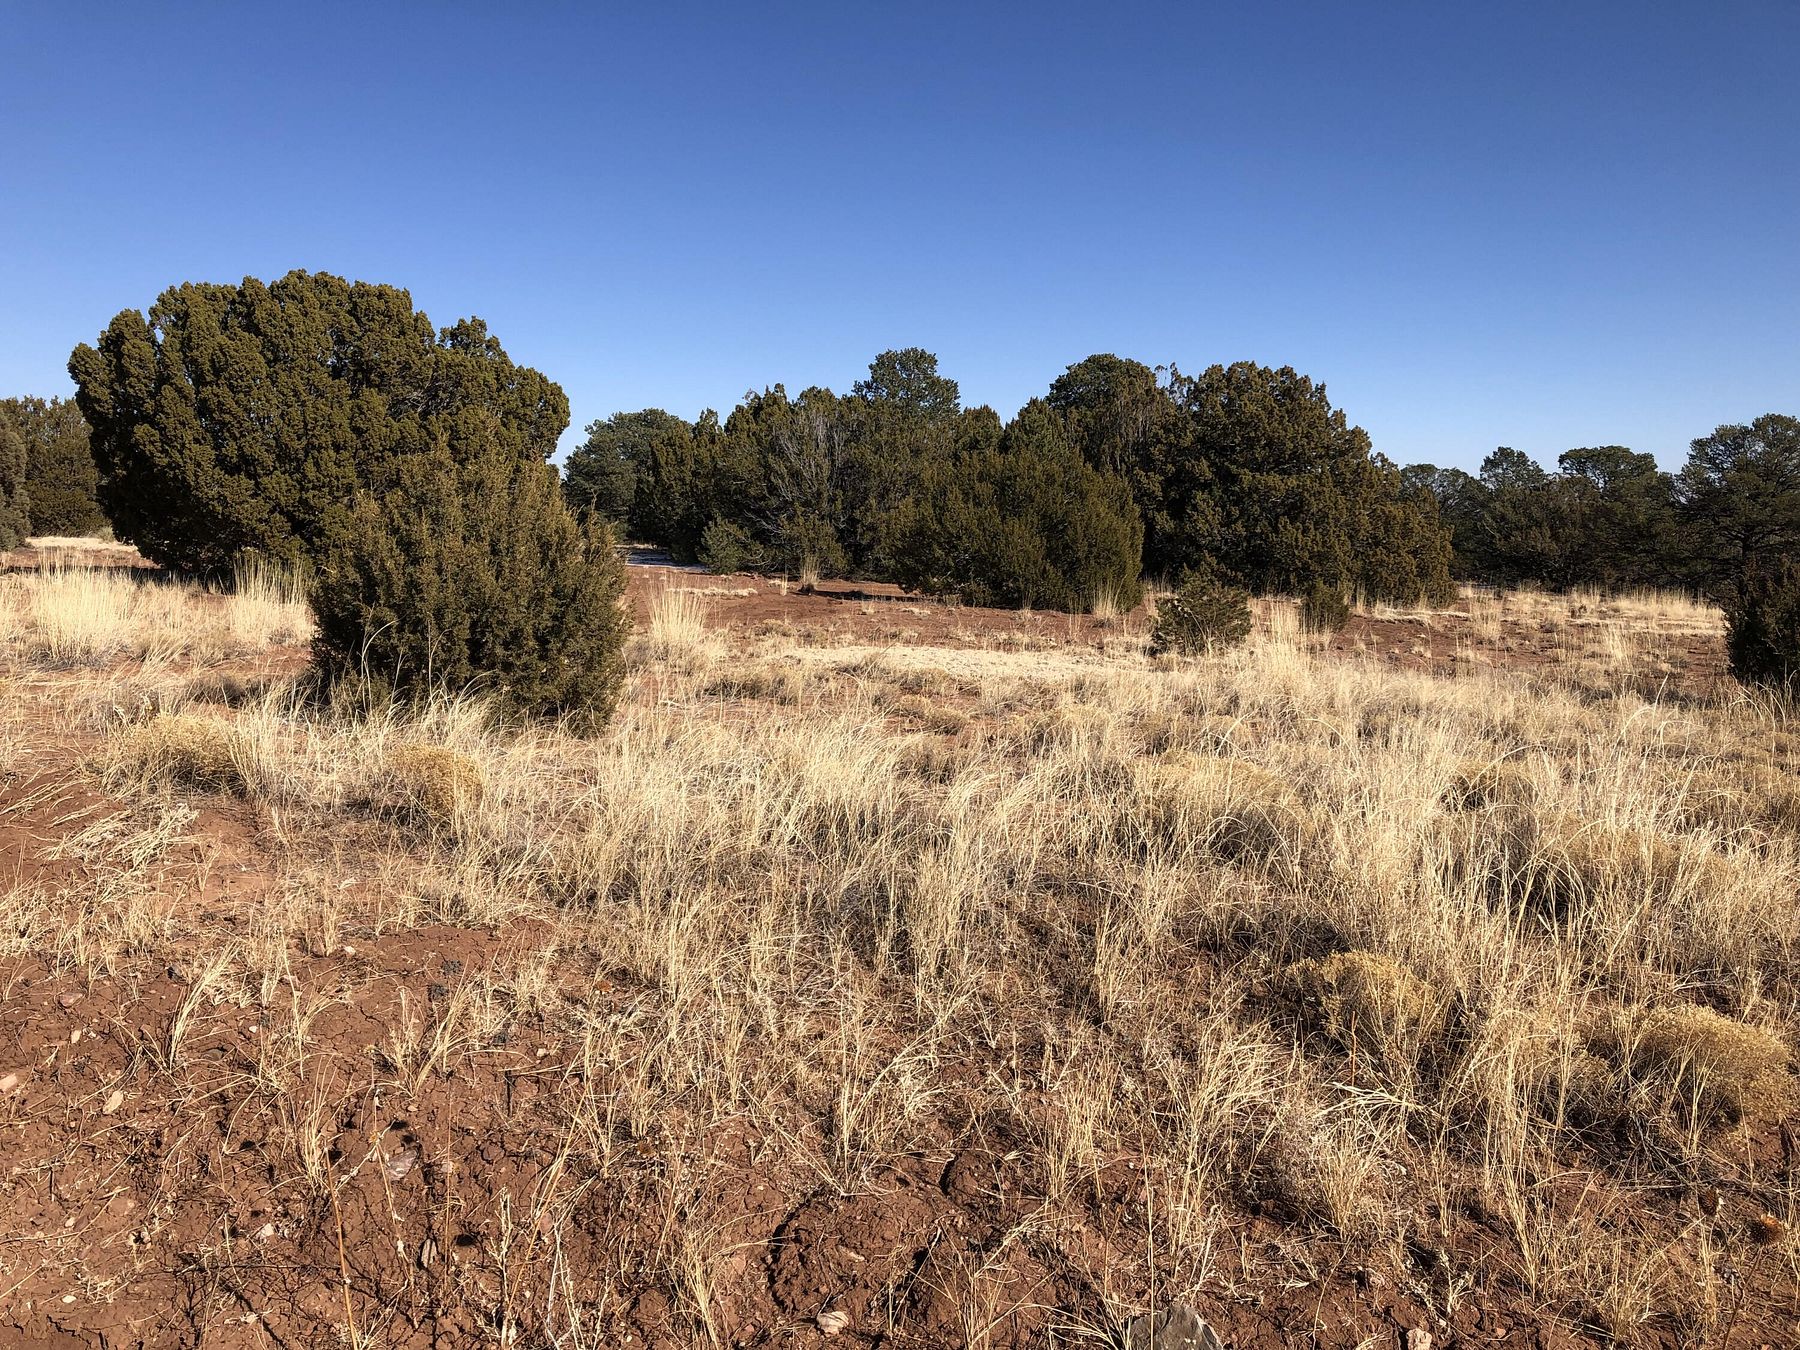 104 Acres of Land Manzano, New Mexico, NM